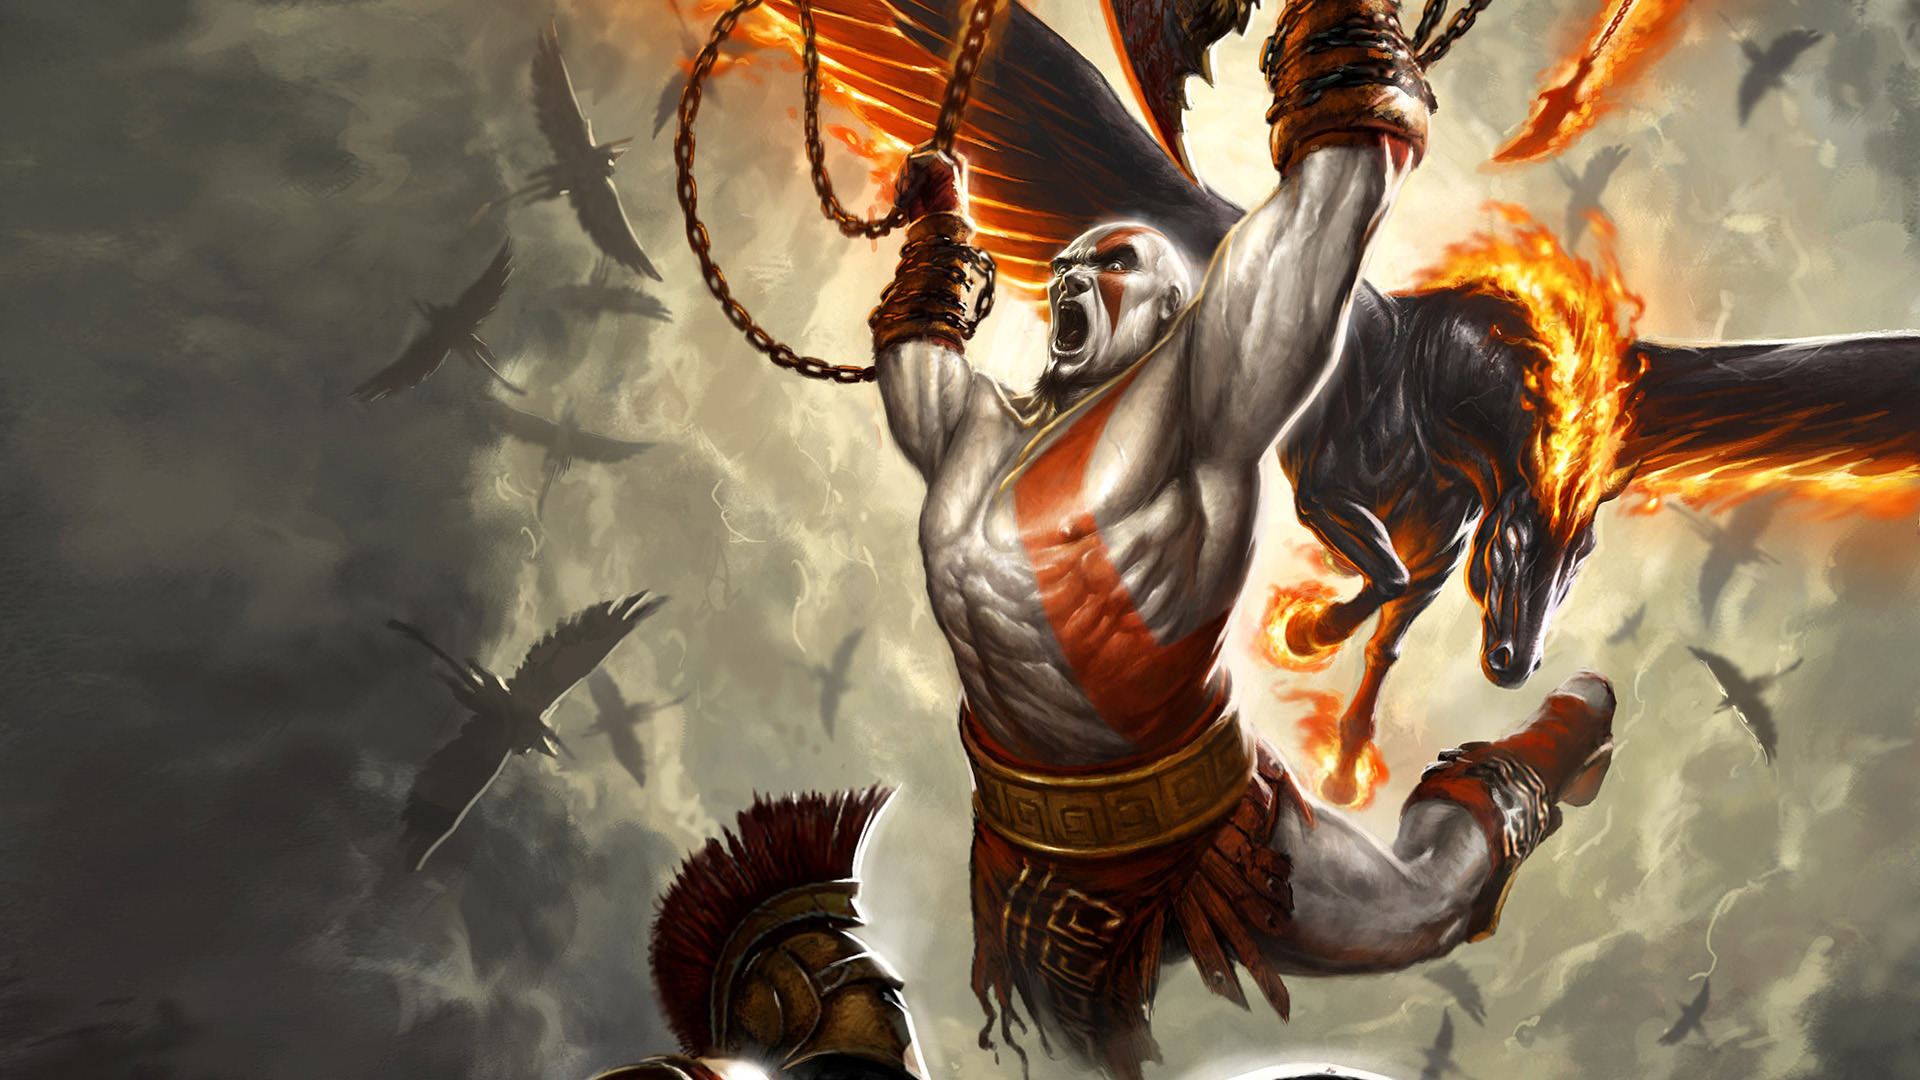 Wallpaper son of Kratos, God of war game